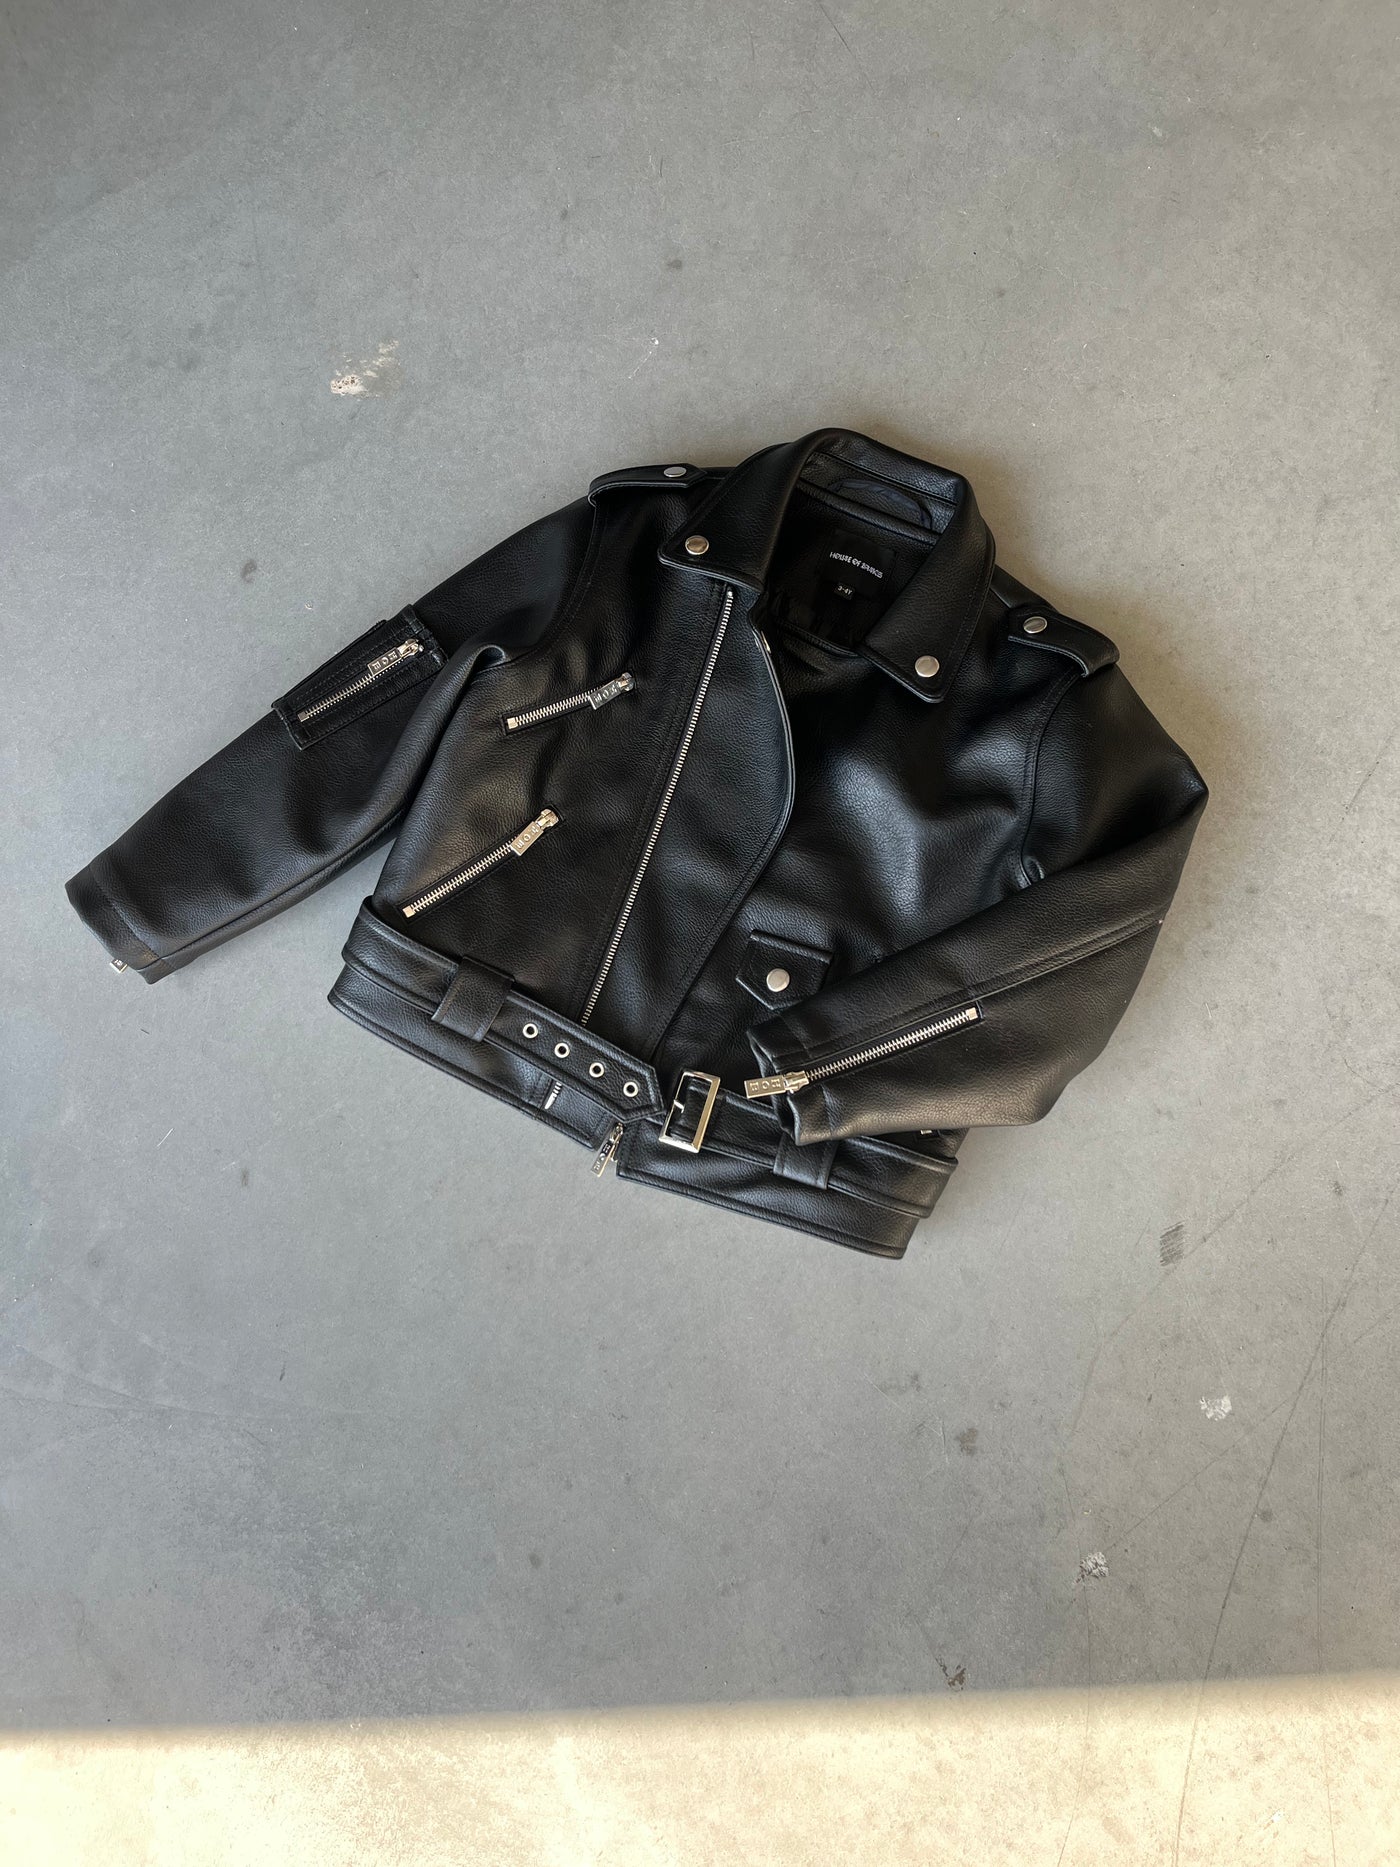 The Faux Leather Biker Jacket